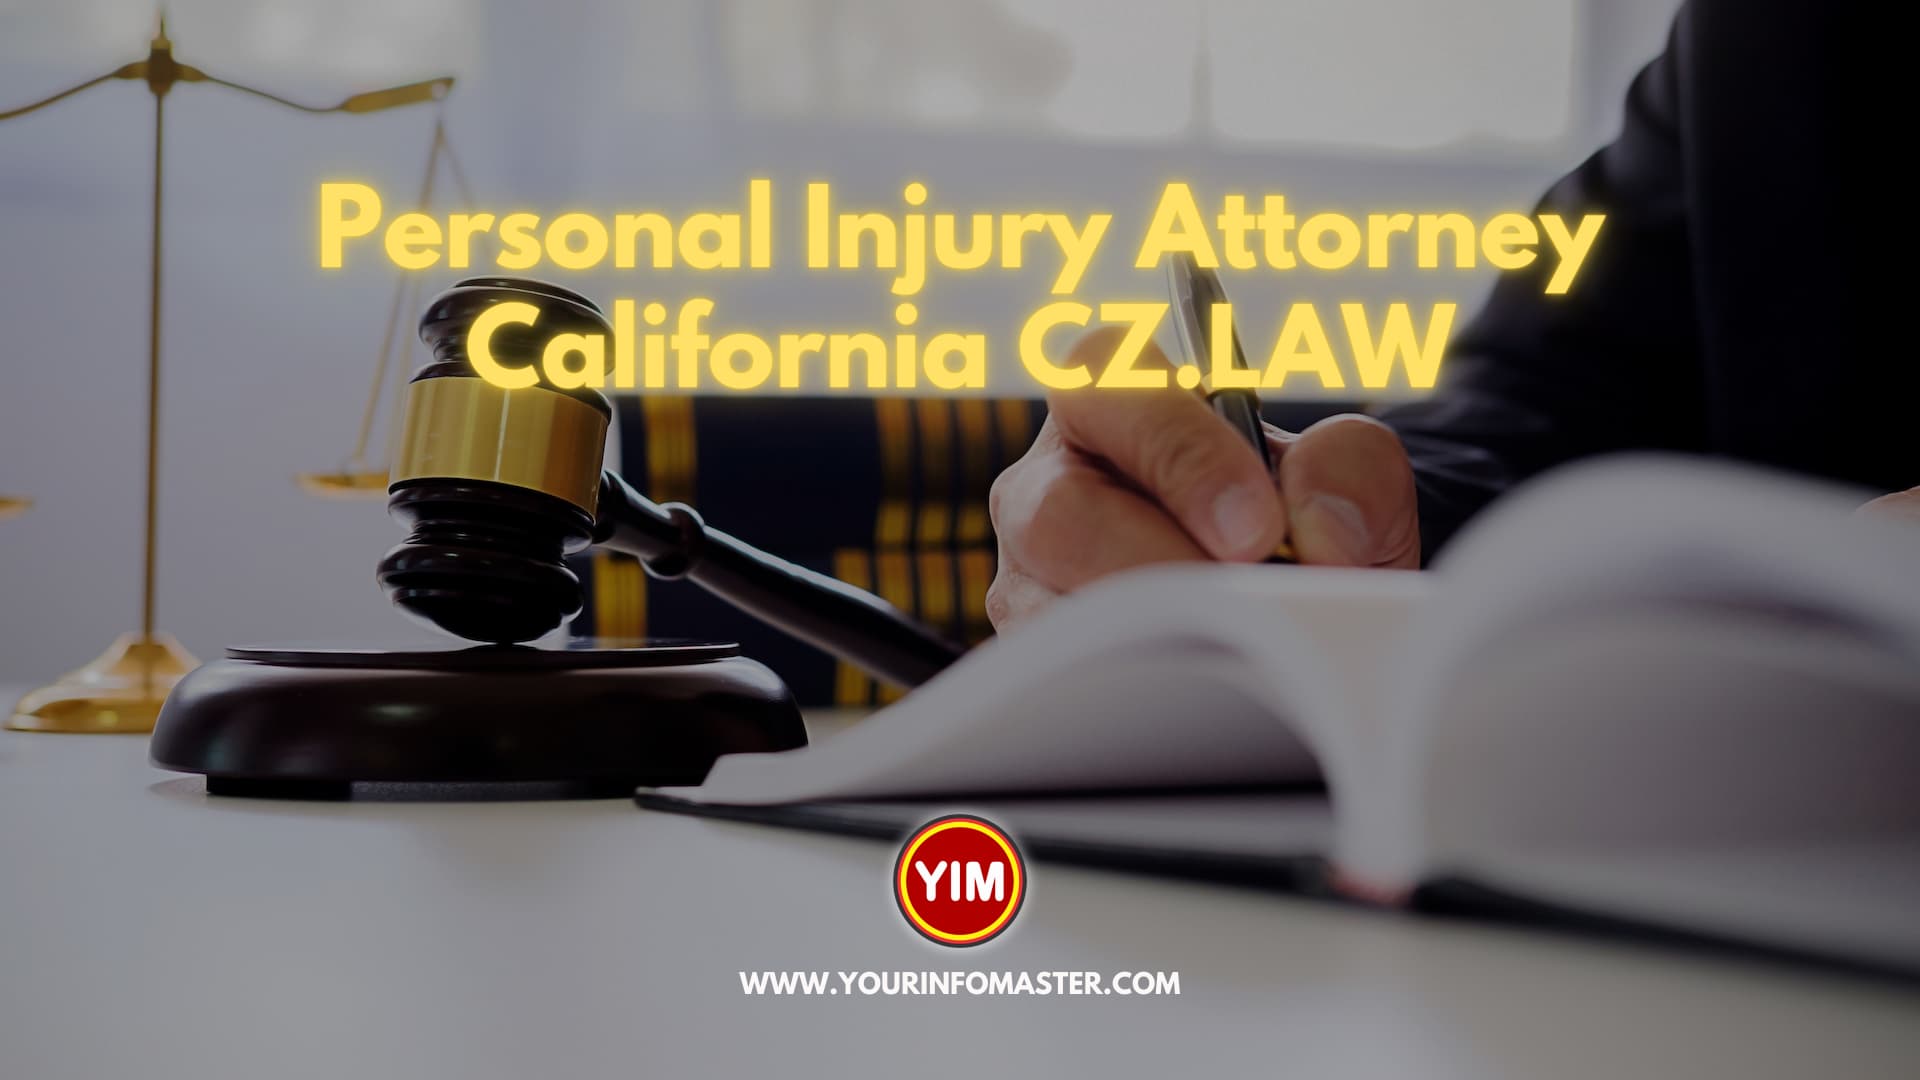 Personal Injury Attorney California CZ.LAW | Personal Injury Attorneys, Info Gallery, Information, Law, Personal Injury Attorneys